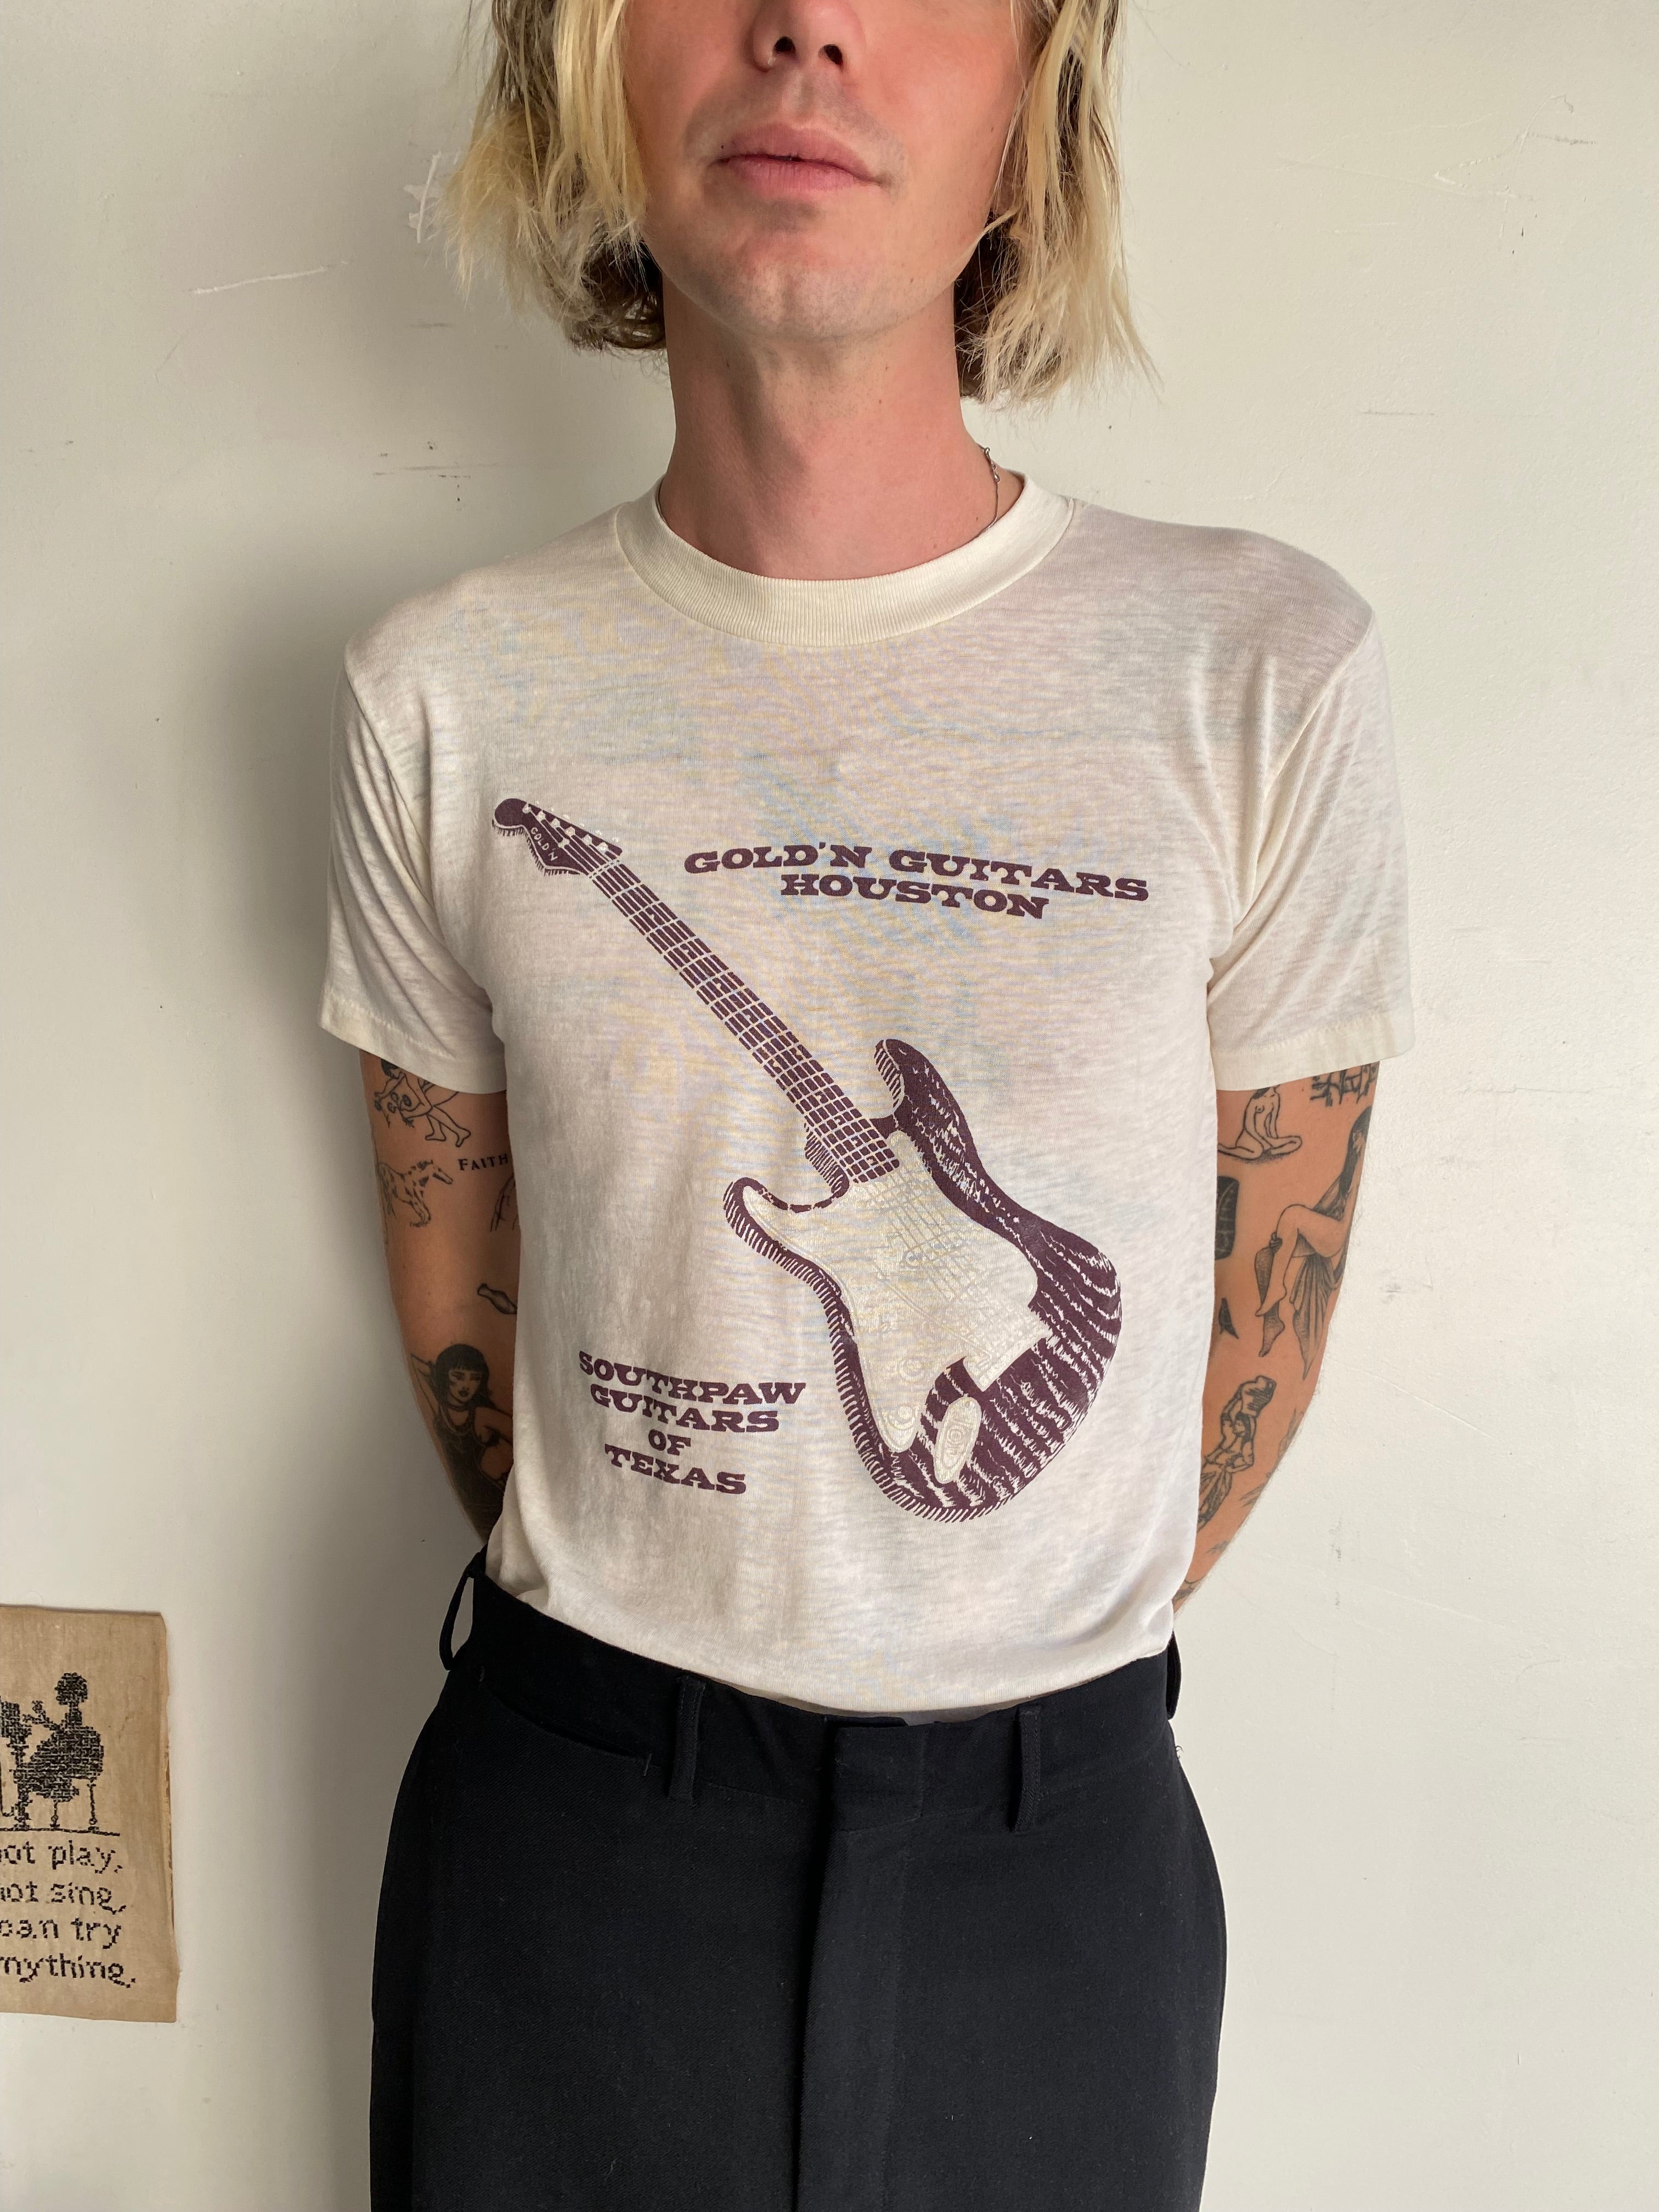 1980s Southpaw Guitars T-Shirt (S/M)